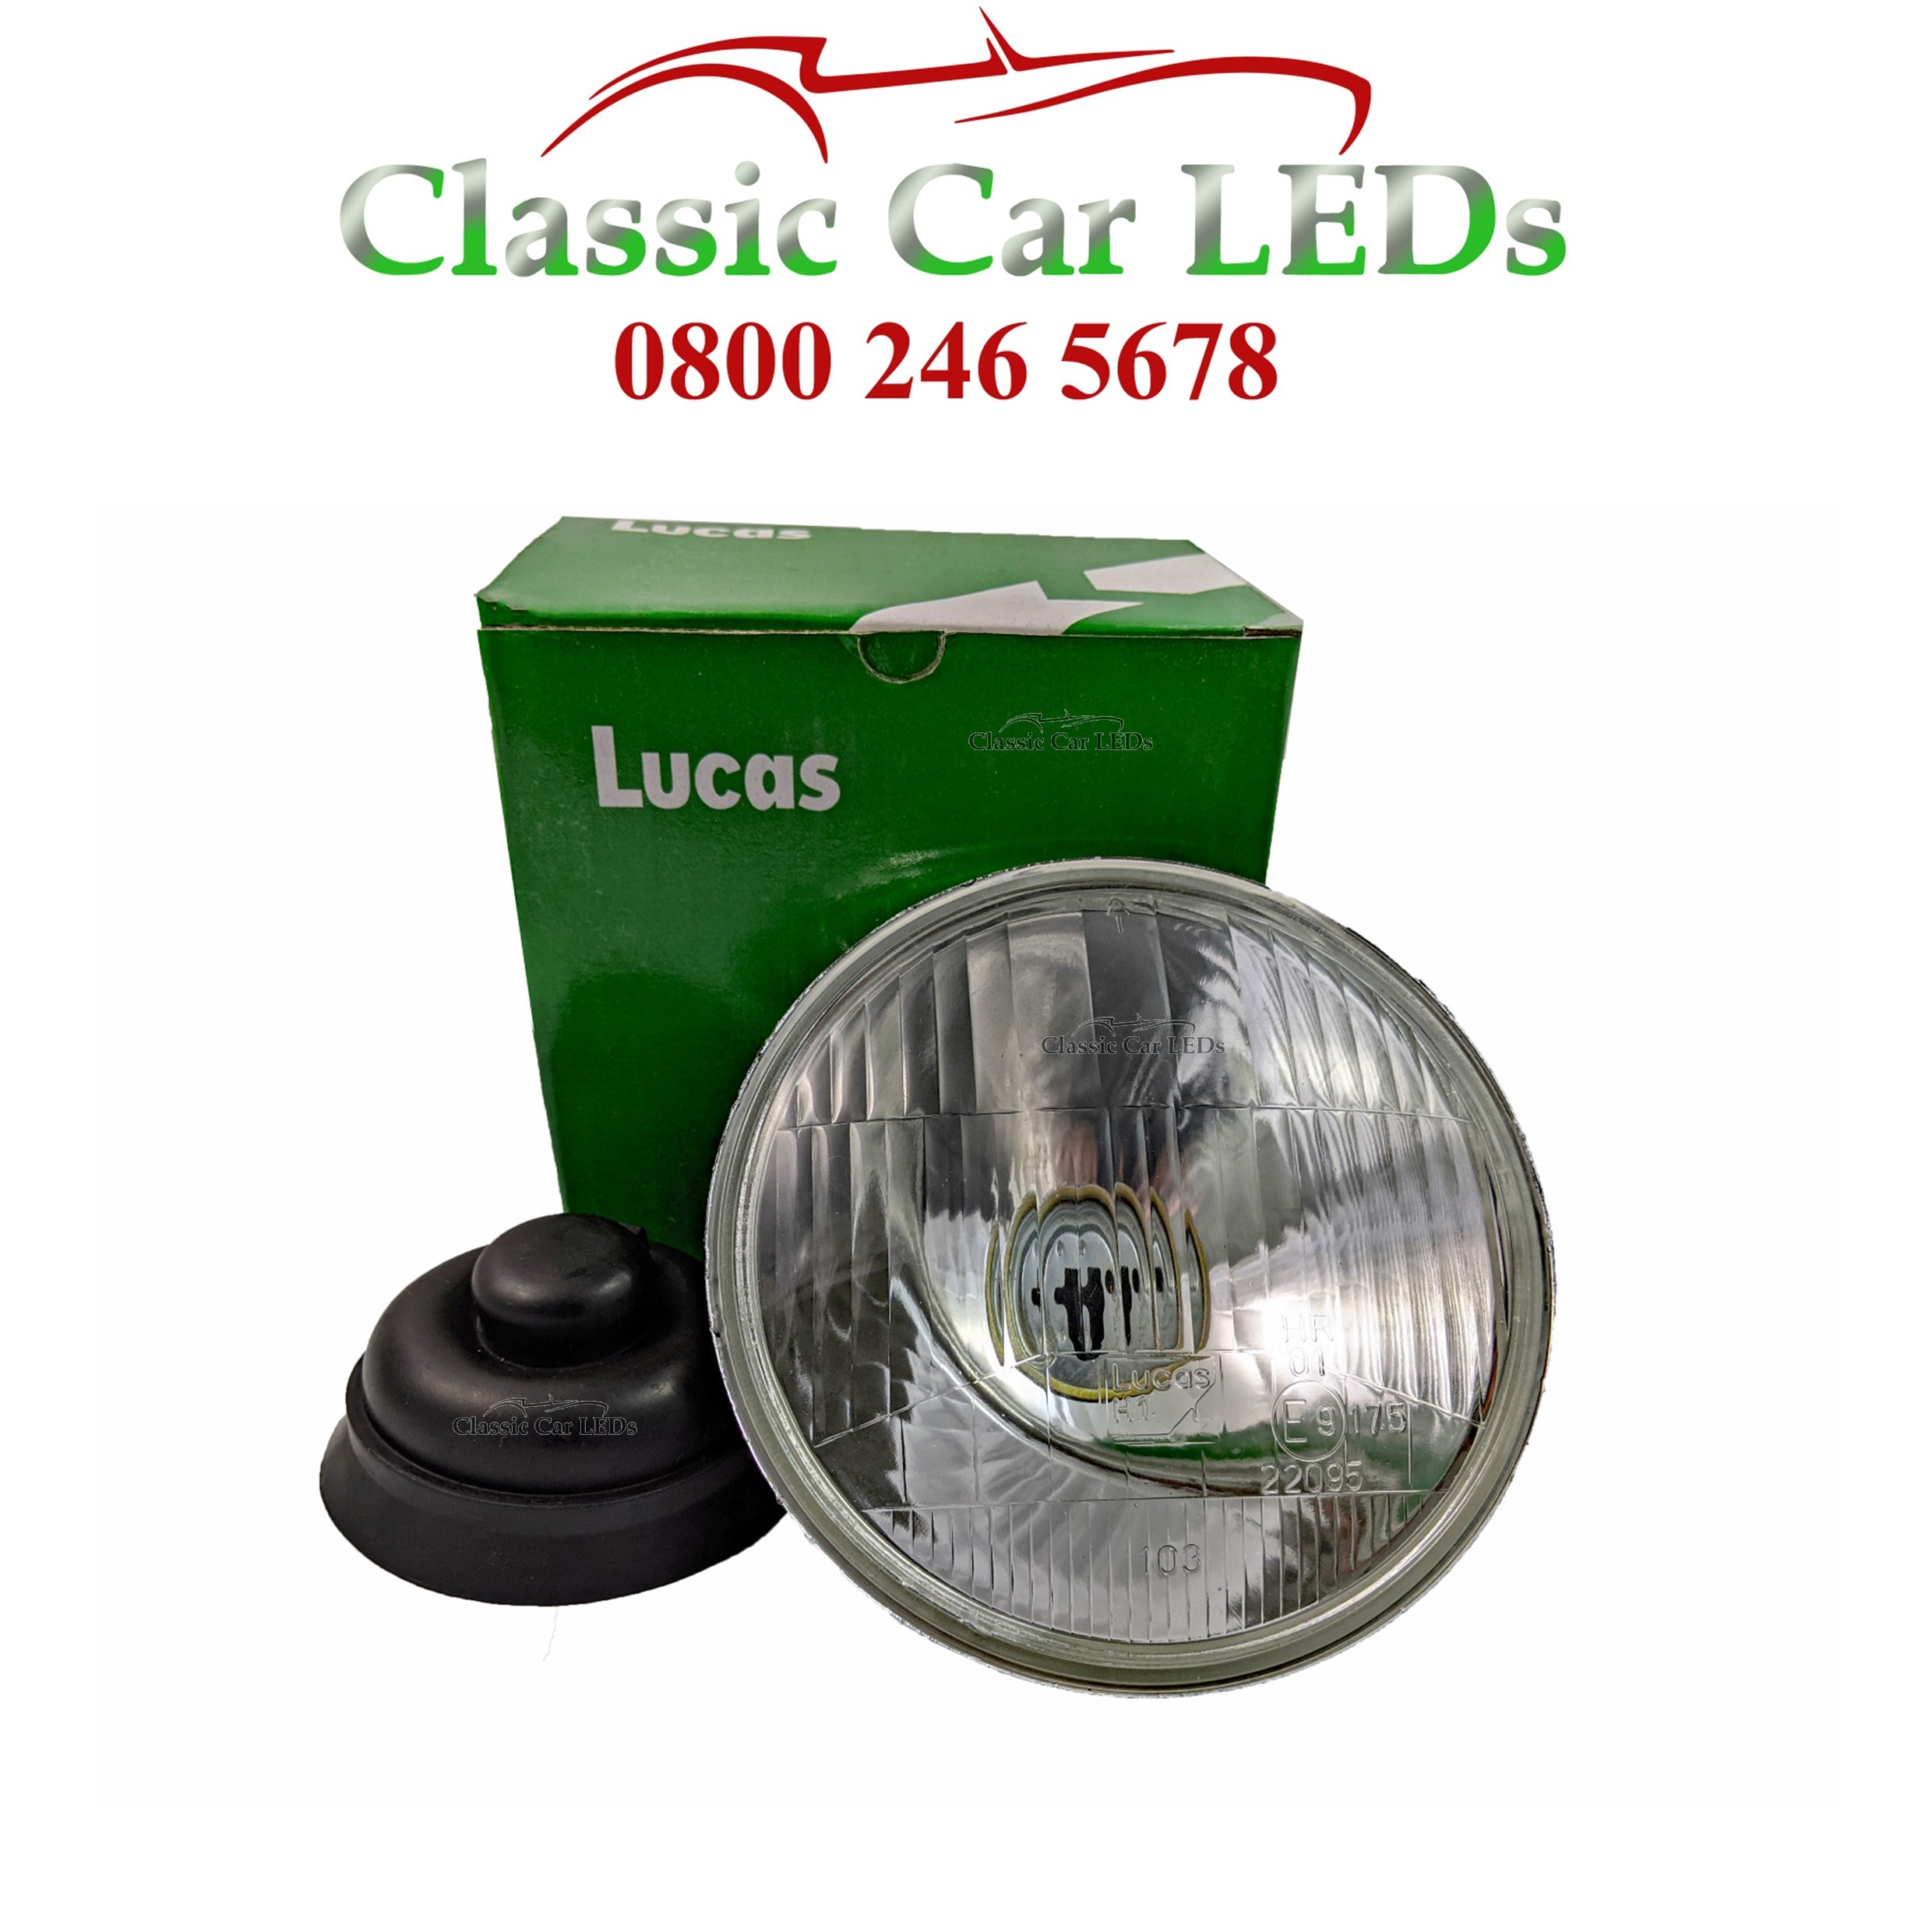 langsom Slikke rotation Lucas LUB222 5 3/4" H1 Main Beam Headlamp Reflector E Marked Classic Car –  Classic Car LEDs Ltd